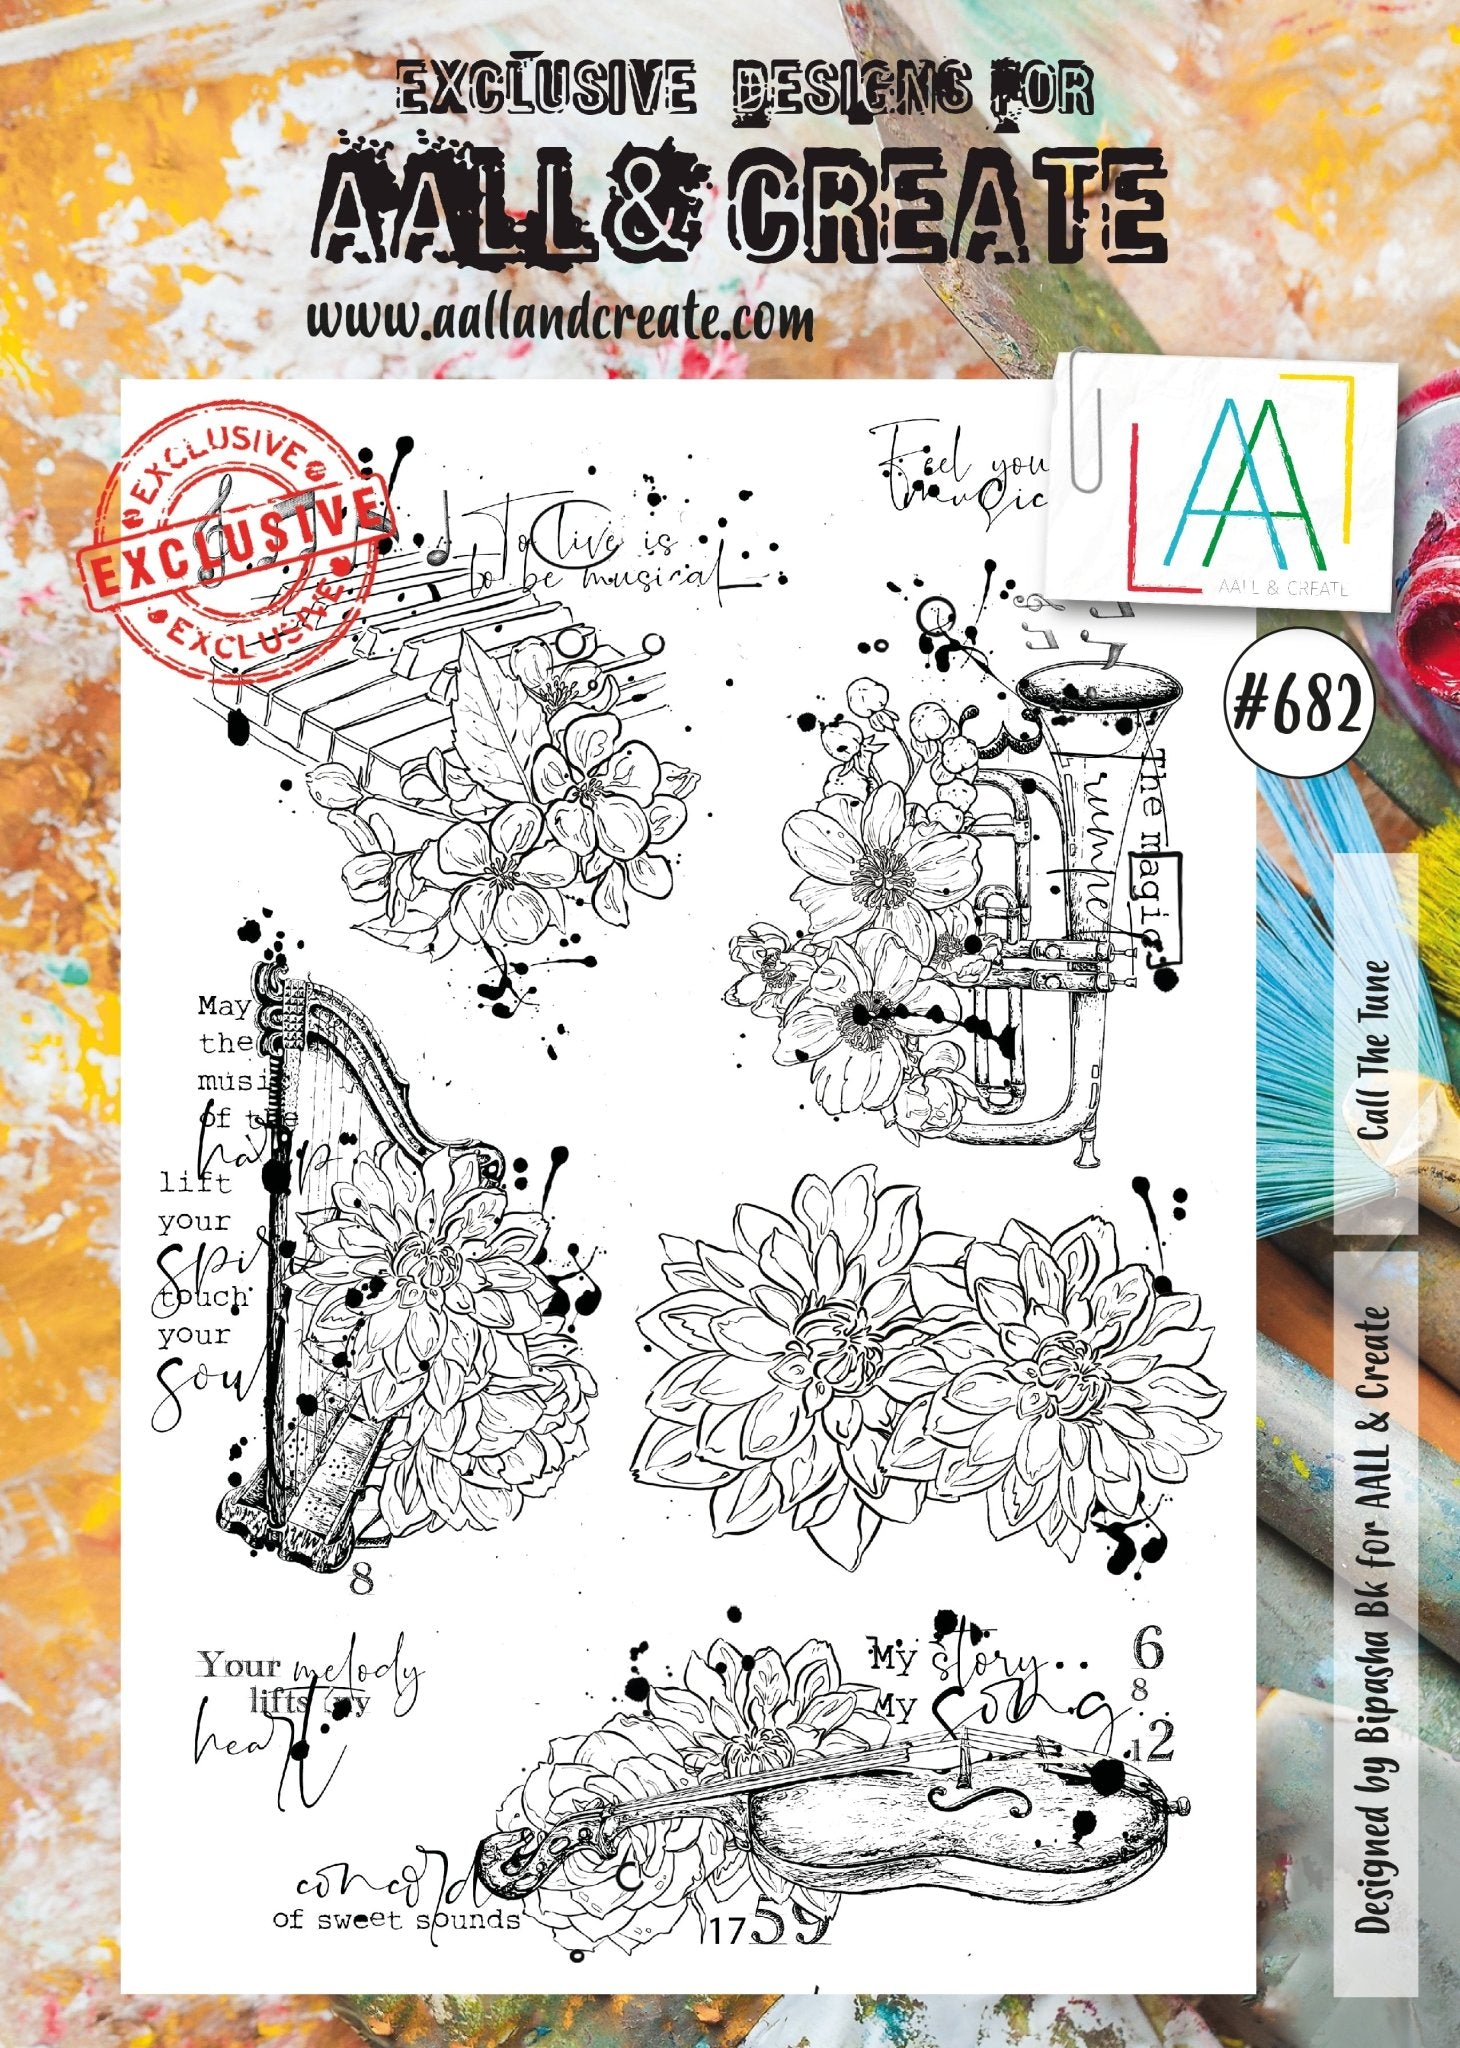 AALL and Create - Call The Tune - A4 - Designer Bipasha BK - Clear Stamp Set - #682 Aall & Create